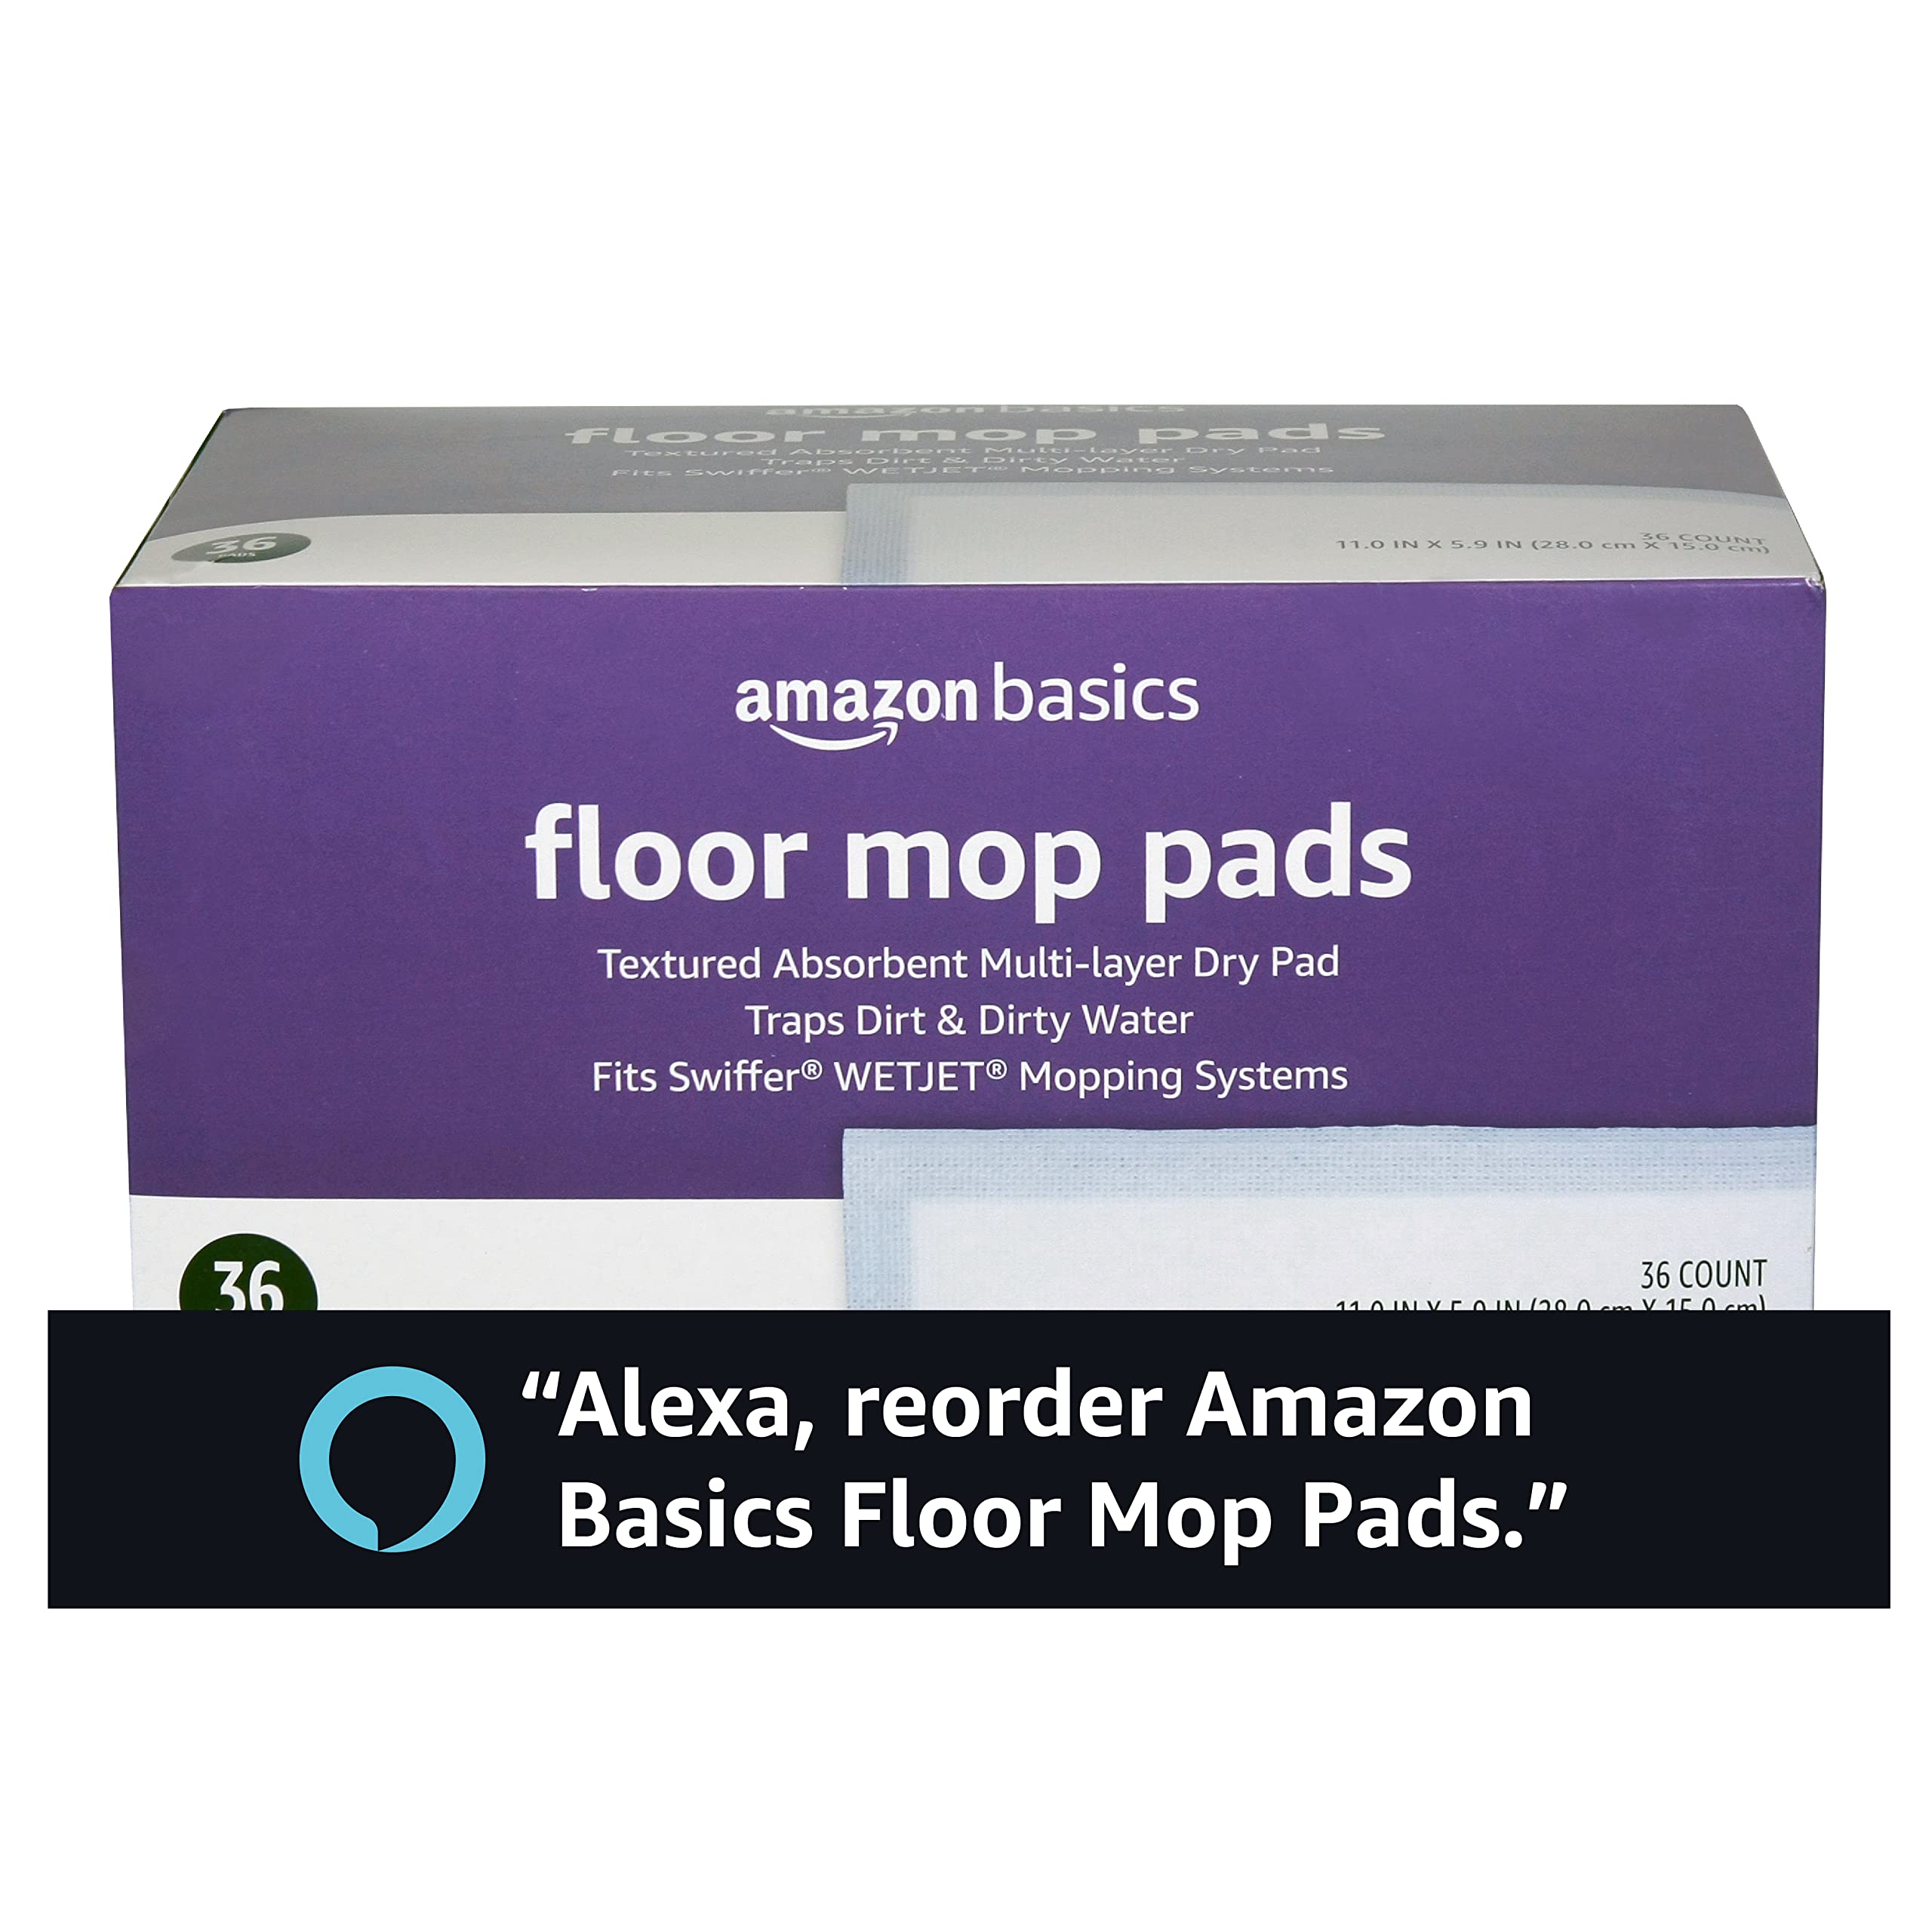 Amazon Basics Dry Floor Mop Pads, 11